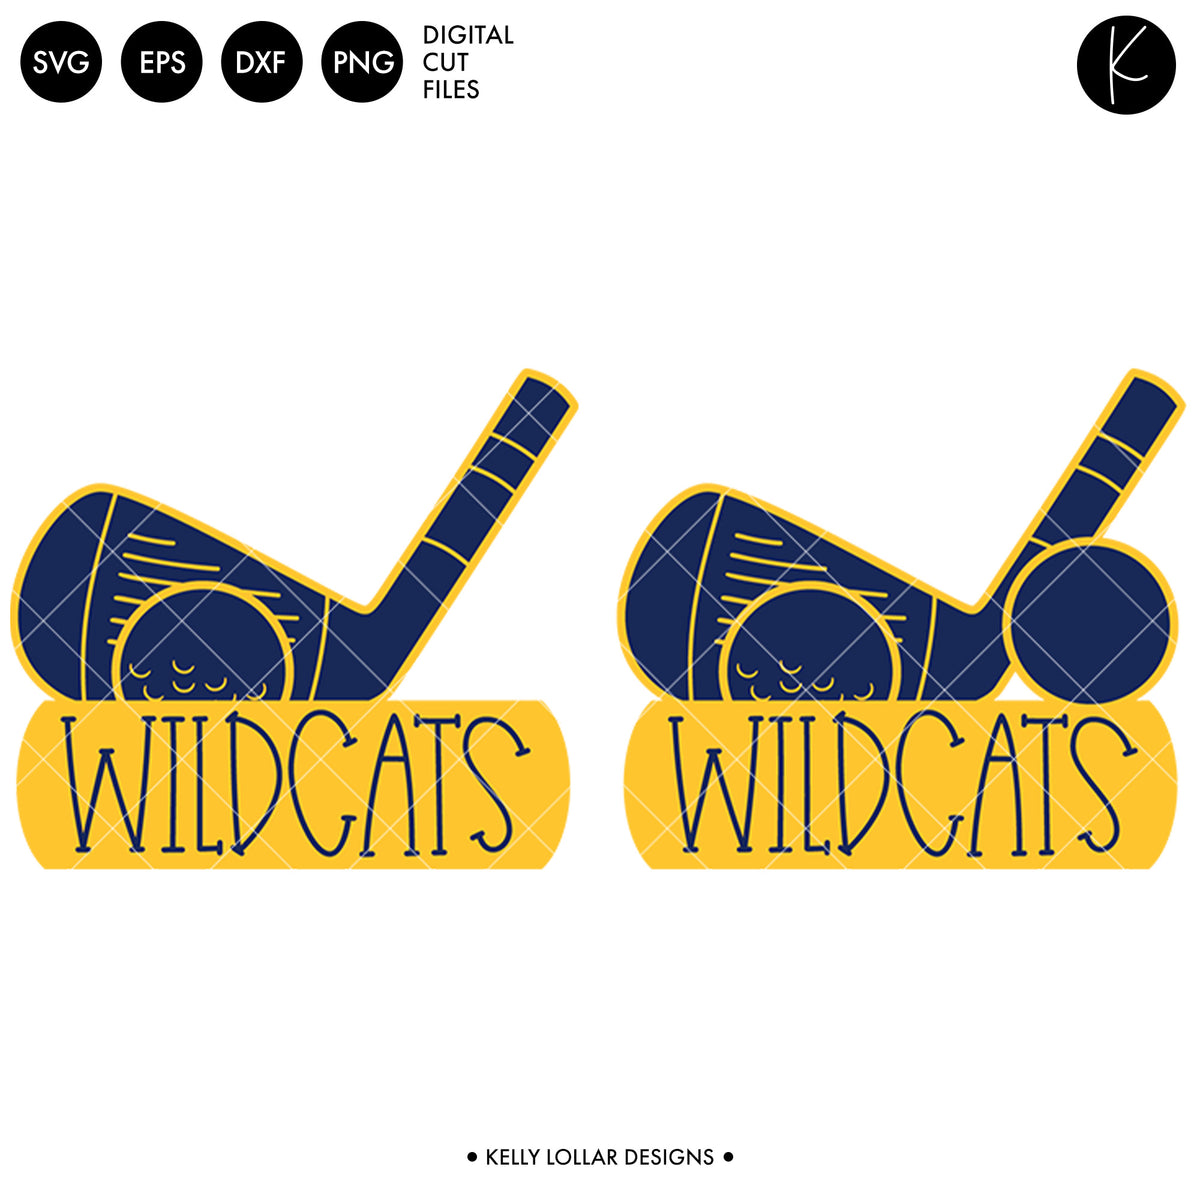 Wildcats Golf Bundle | SVG DXF EPS PNG Cut Files